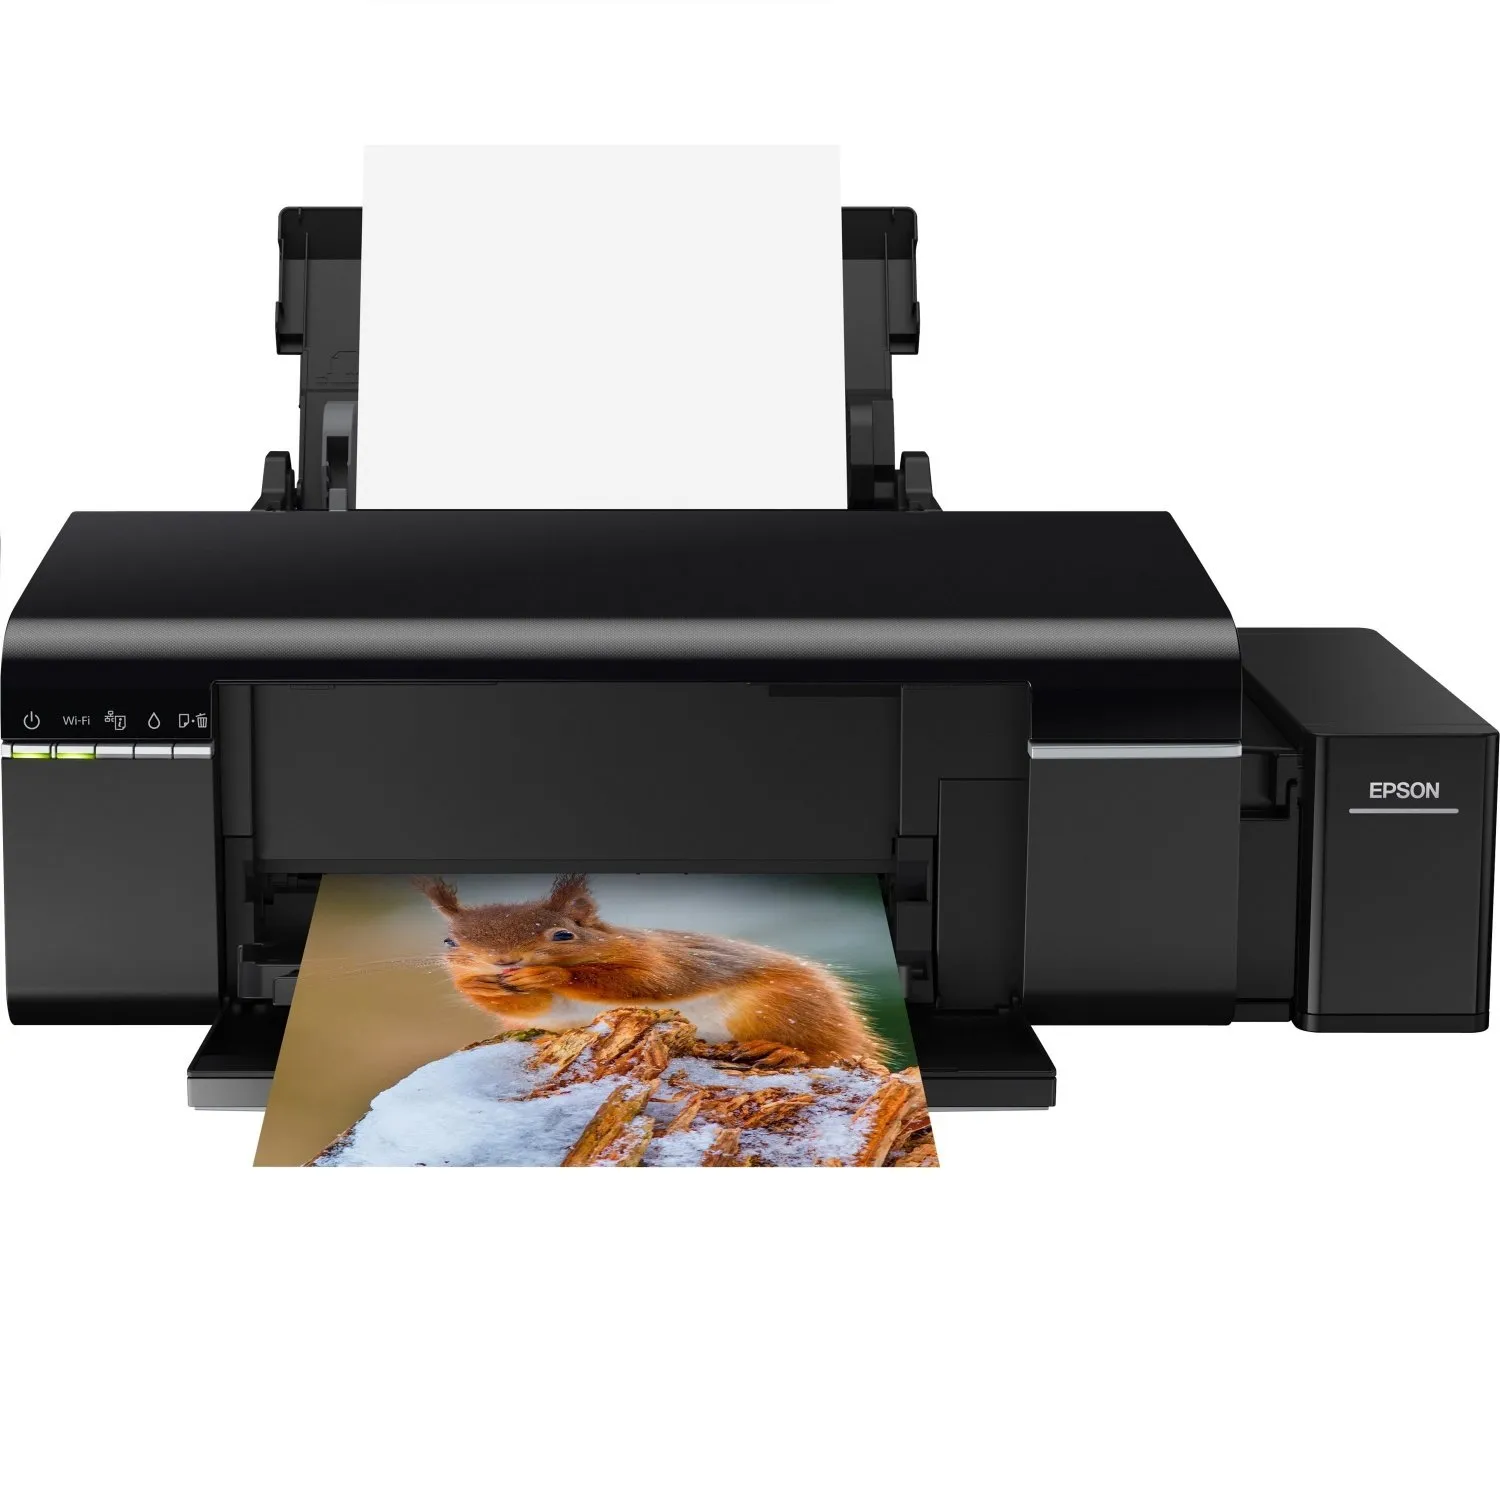 Принтер Epson L805 (A4, 37 стр / мин, 5760 optimized dpi, 6 красок, USB2.0, WiFi)#2